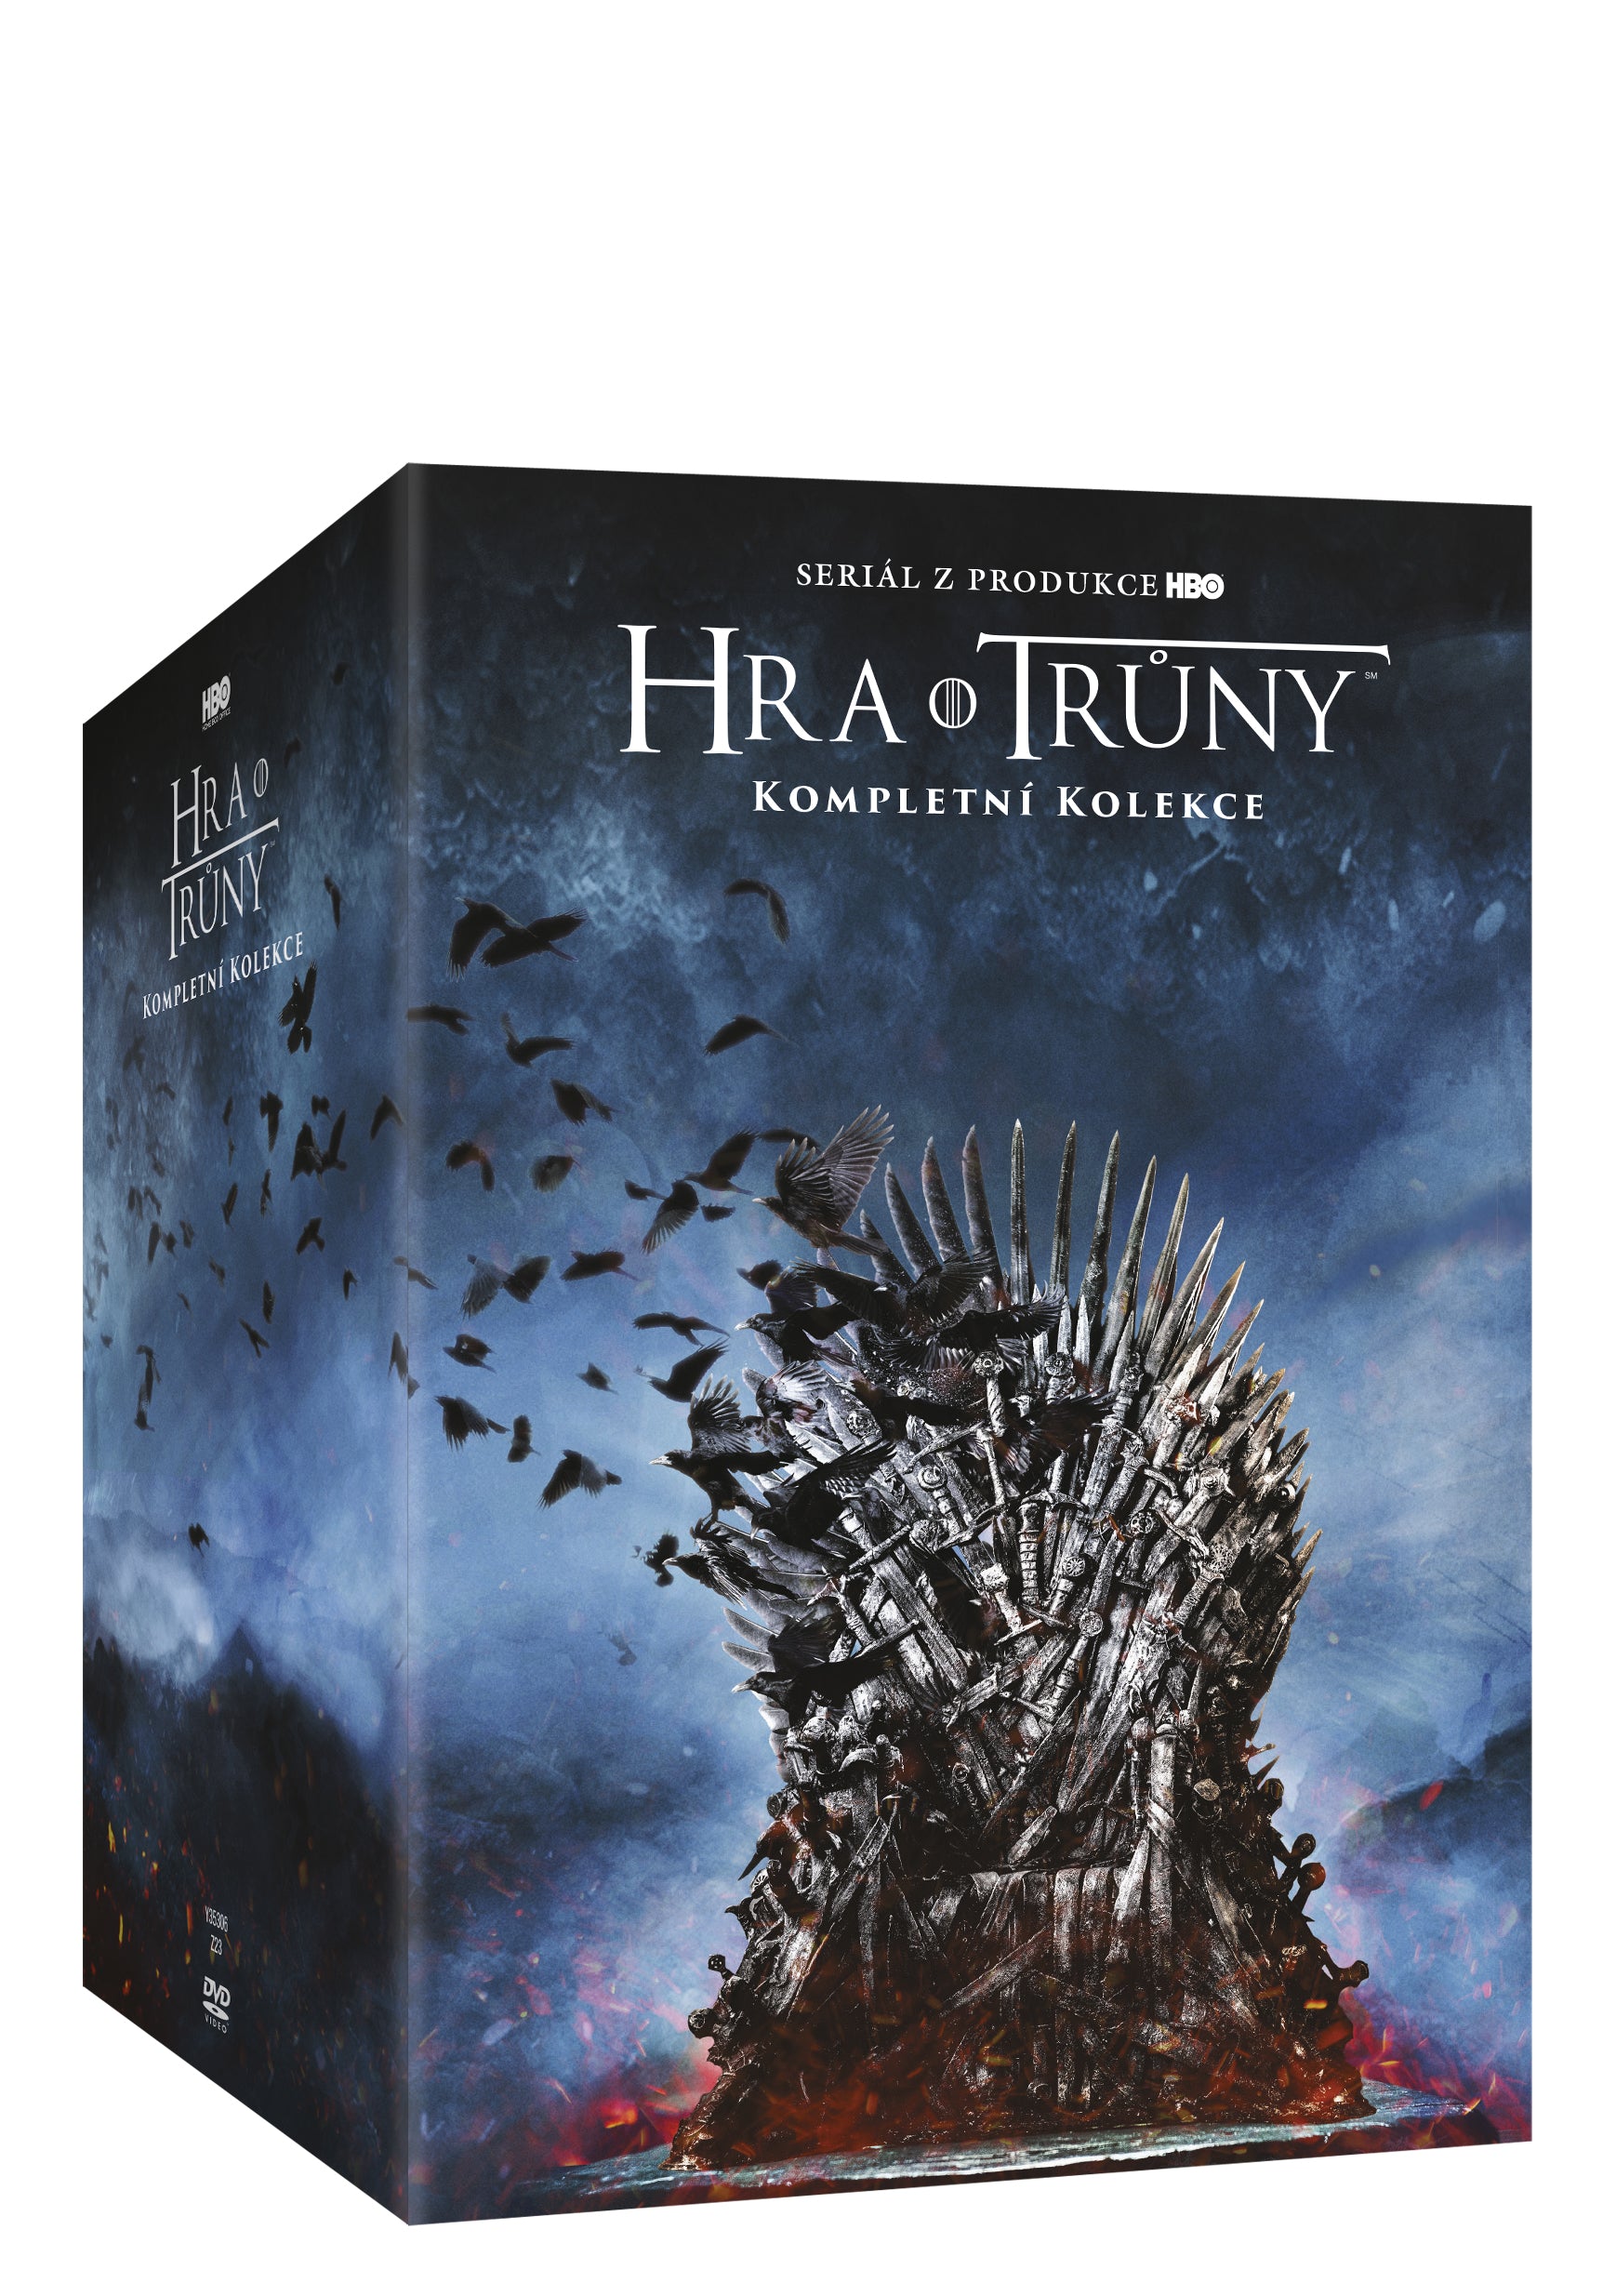 Hra o Truny Kolekce 1.-8. Serie 38DVD / Game of Thrones Staffel 1-8 DVD-Komplettbox-Set